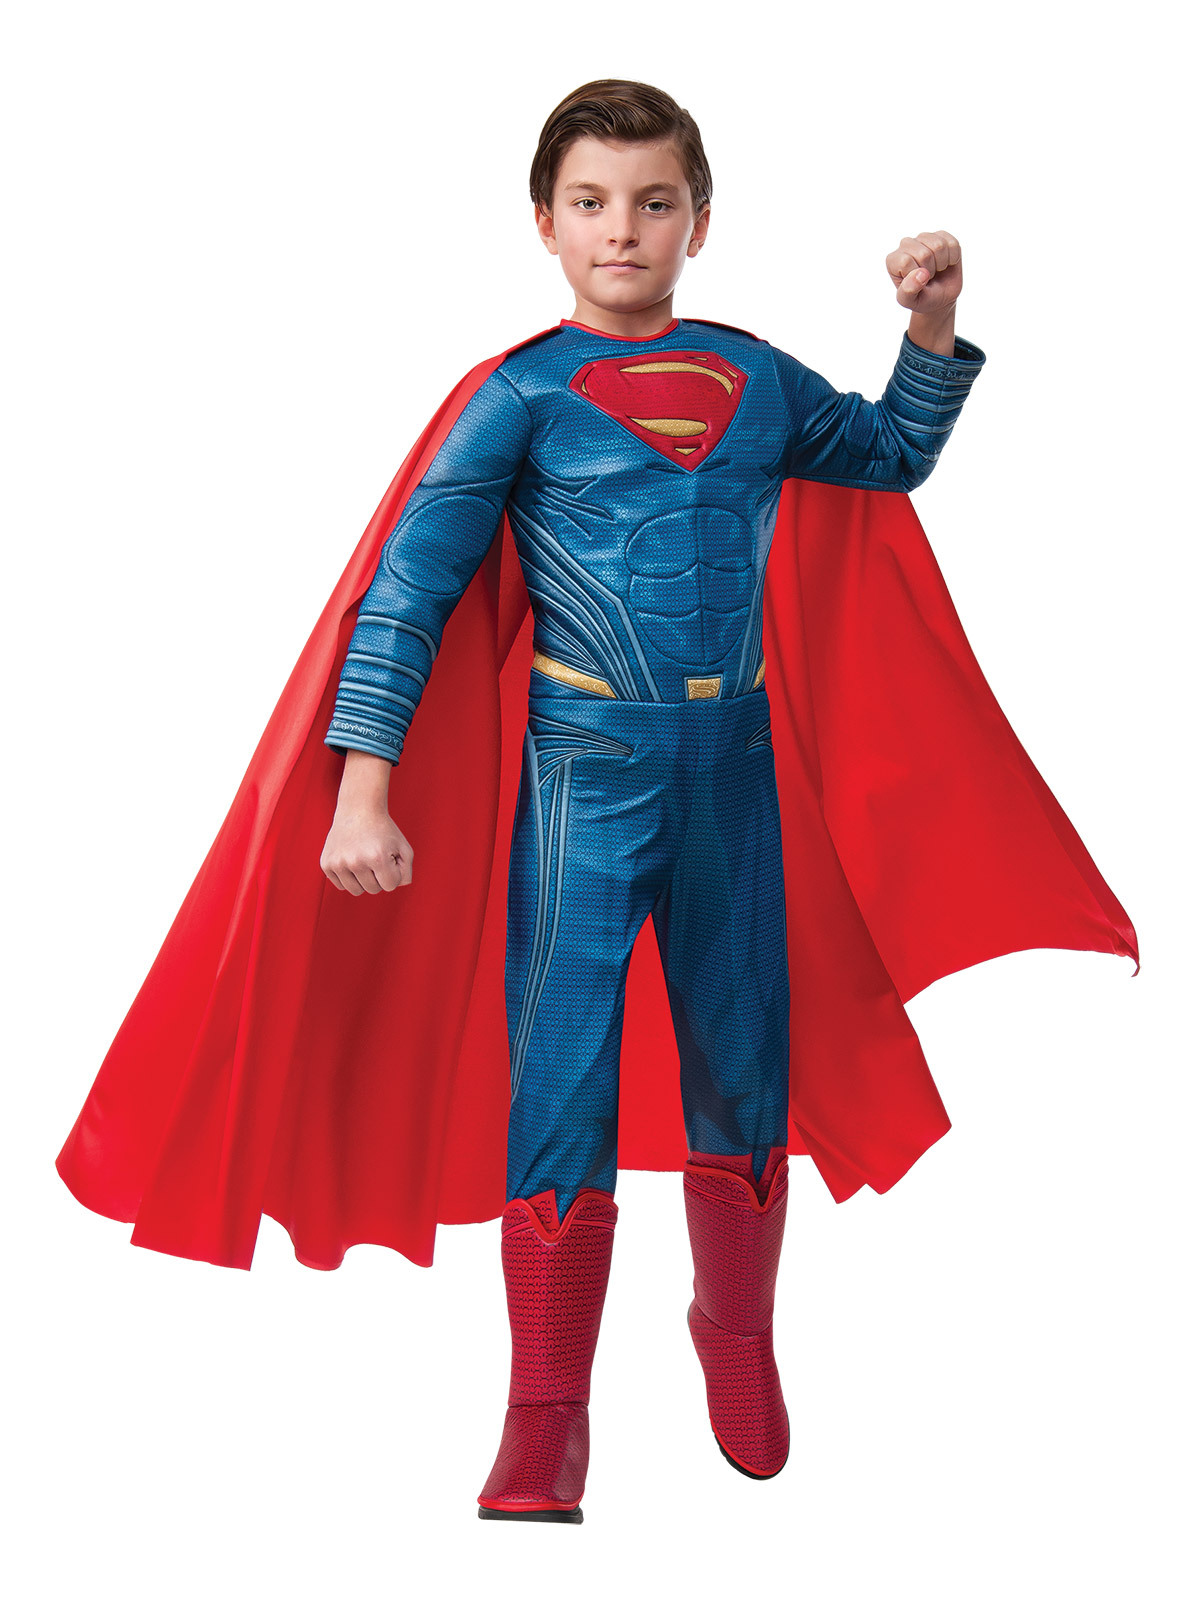 Buy Superman Premium Costume - Size 6-8 Online in Australia